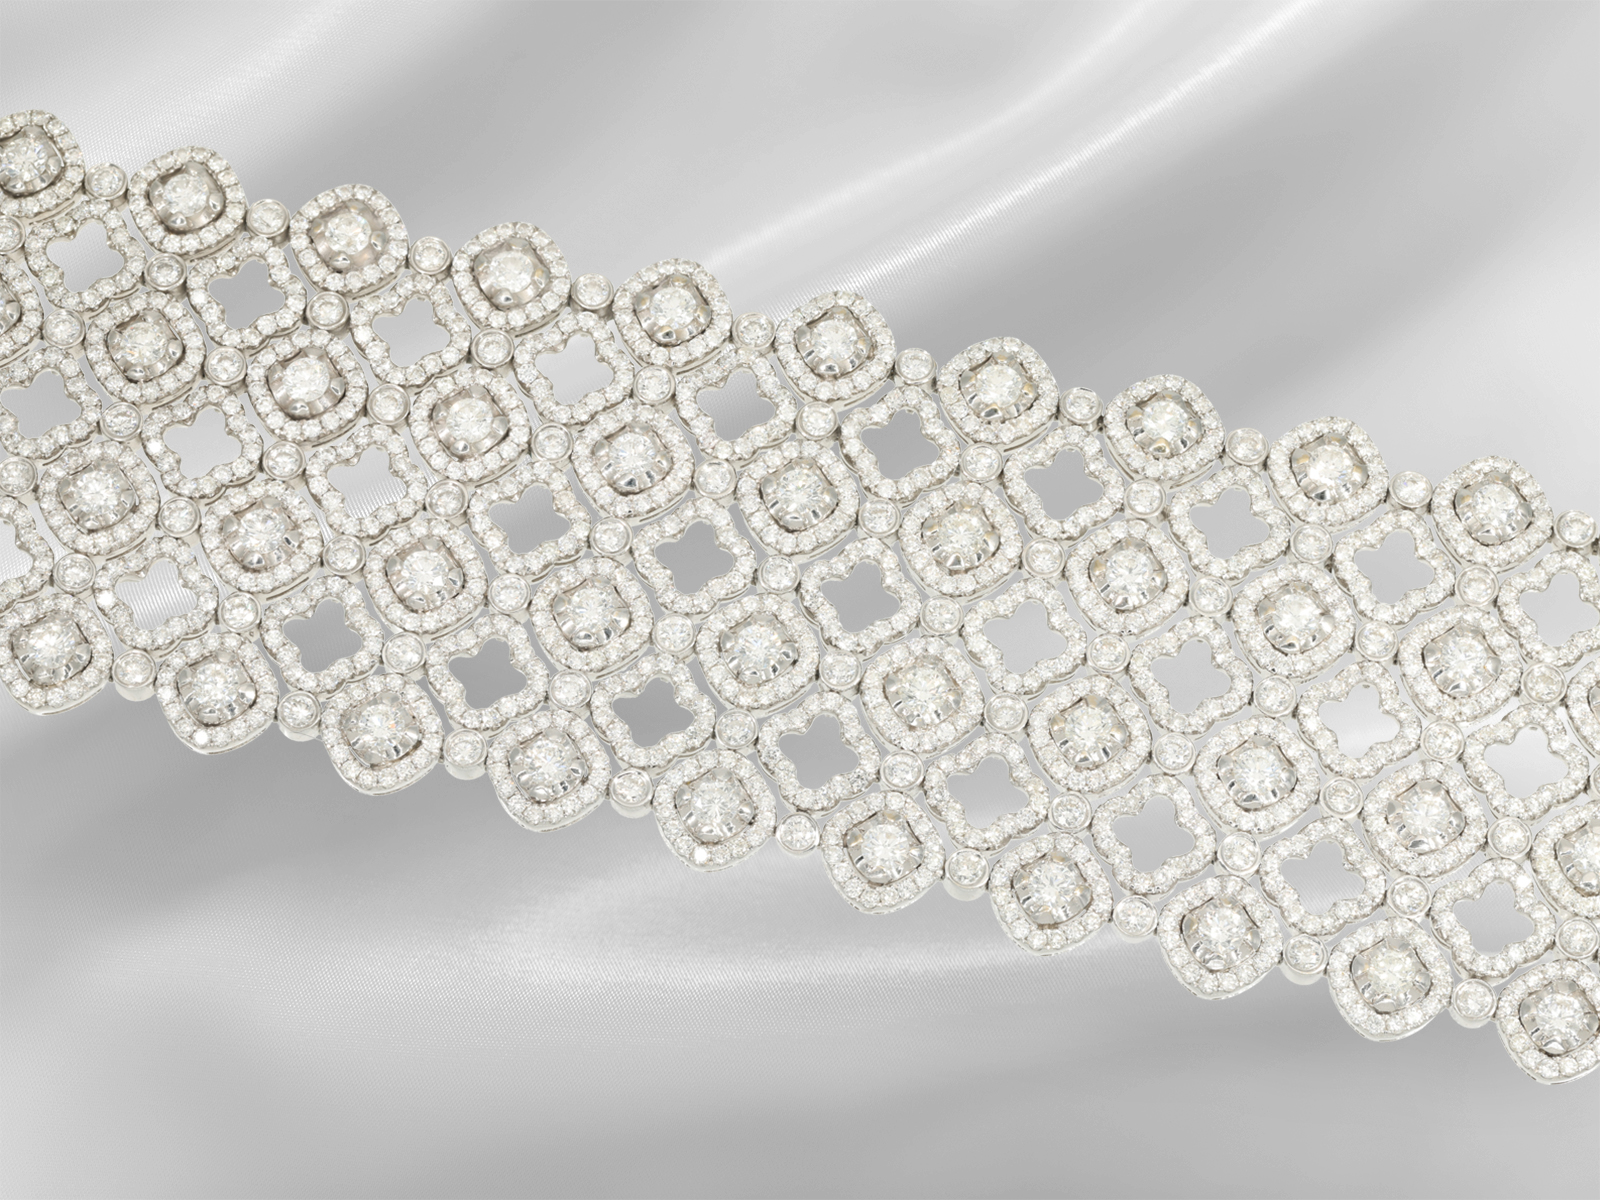 Unique, high-carat brilliant-cut diamond bracelet in 18K white gold, expensive craftsmanship, approx - Image 2 of 5